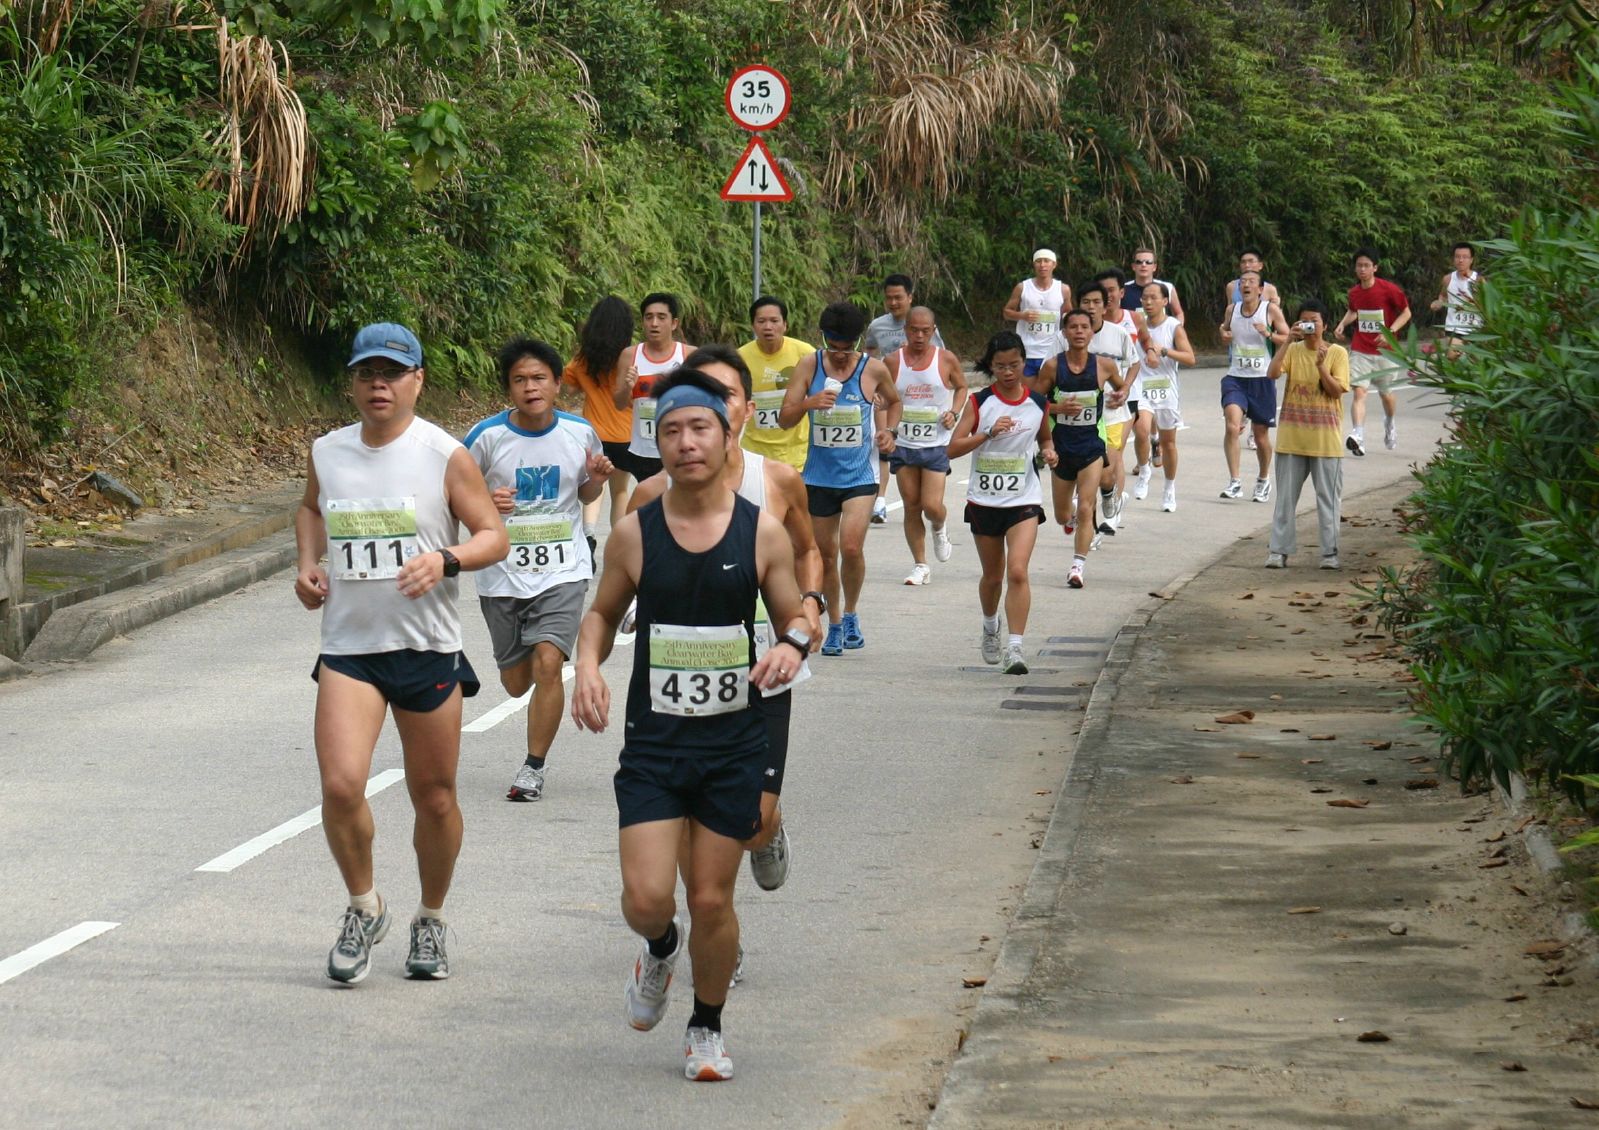 marathon participants run in a race with spectators